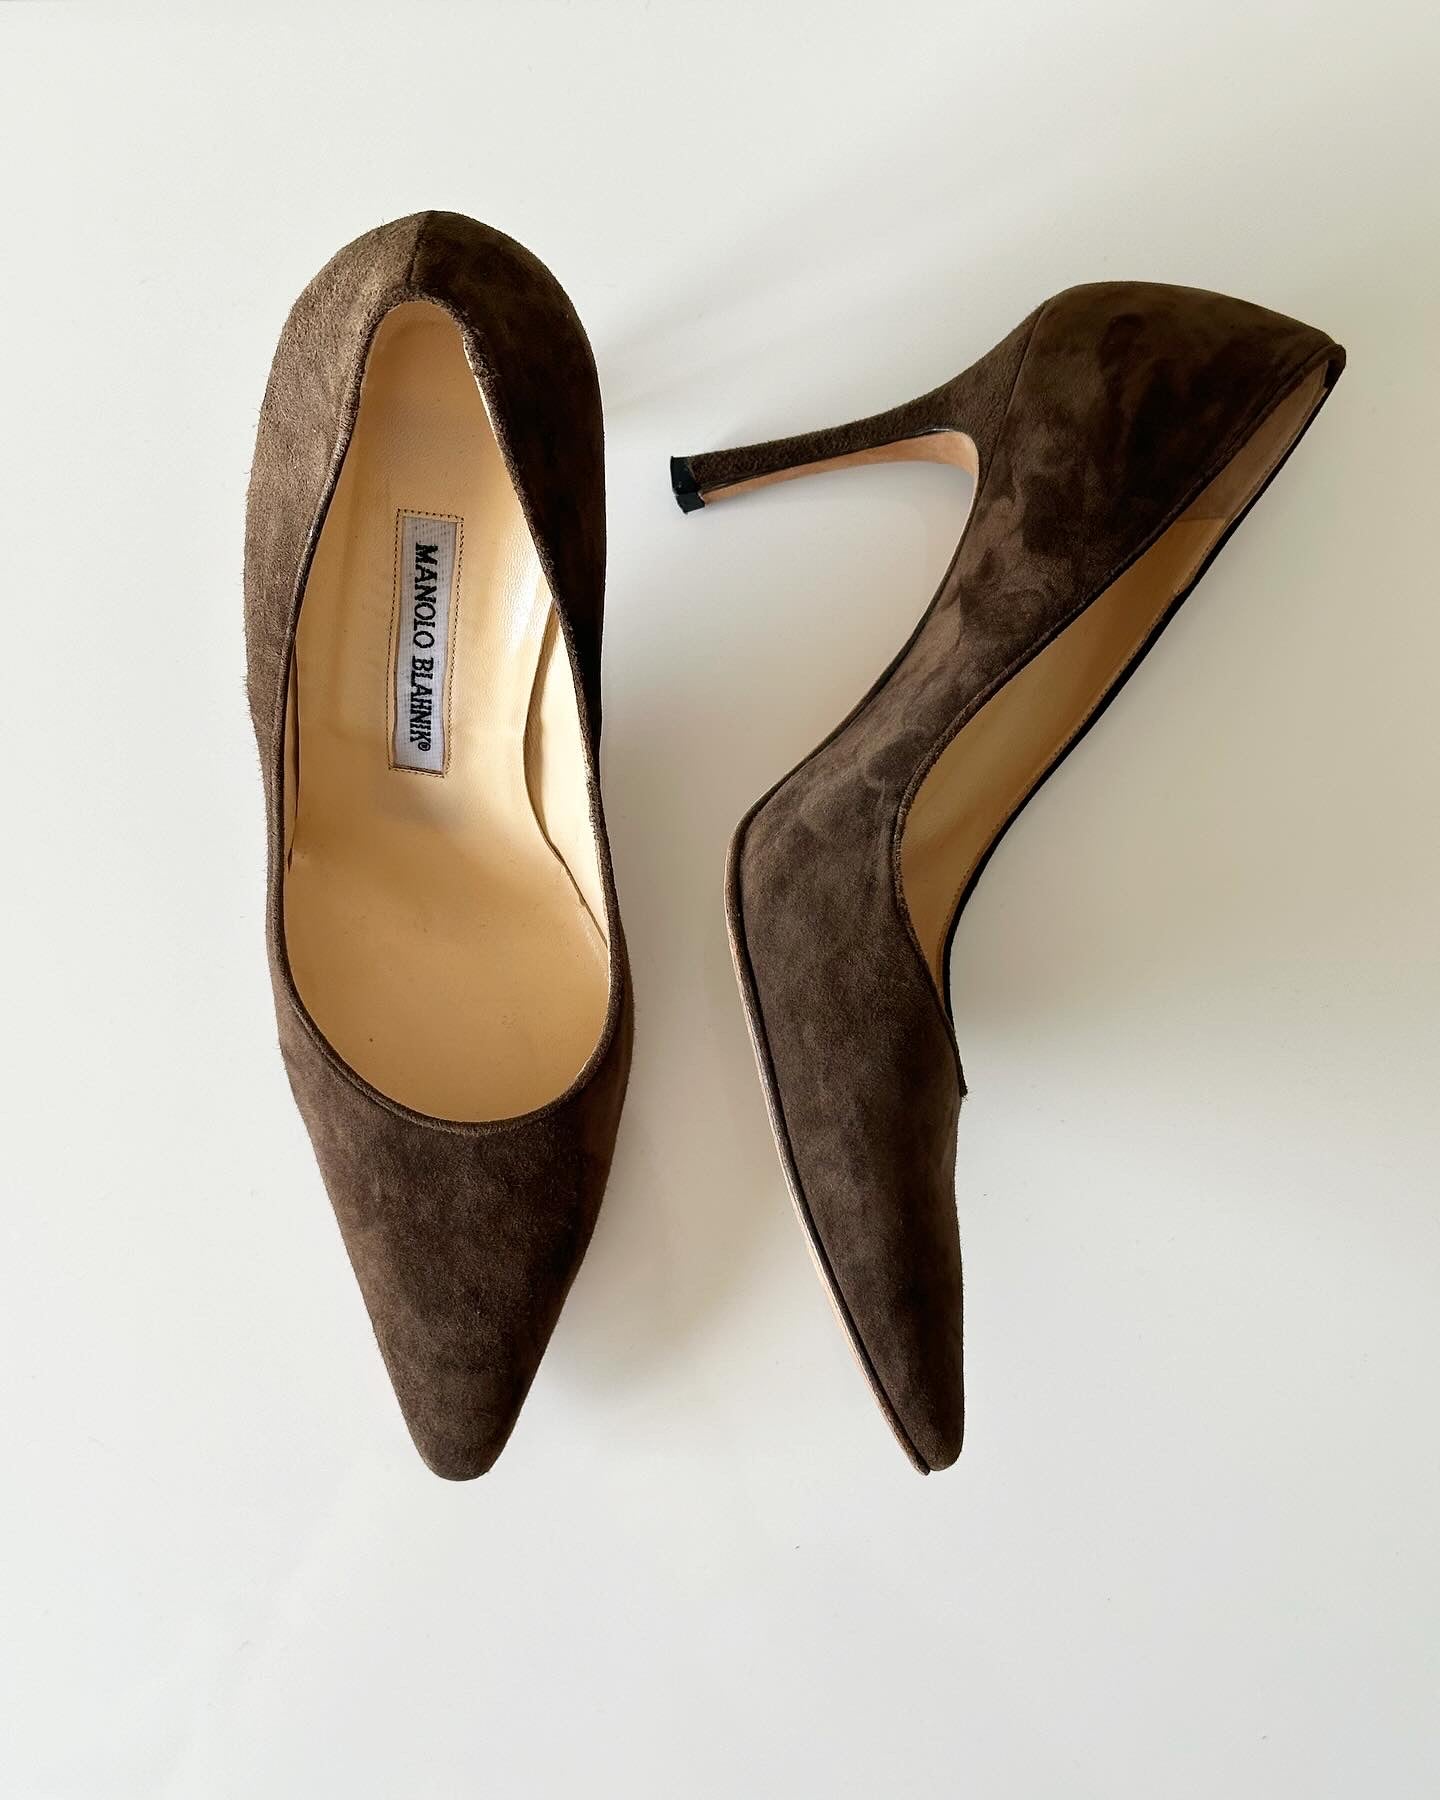 Kaliko Women`s Shoes Heels Court Size EUR-40 Black Leather | eBay | Shoes  women heels, Shoes heels, Womens fashion shoes